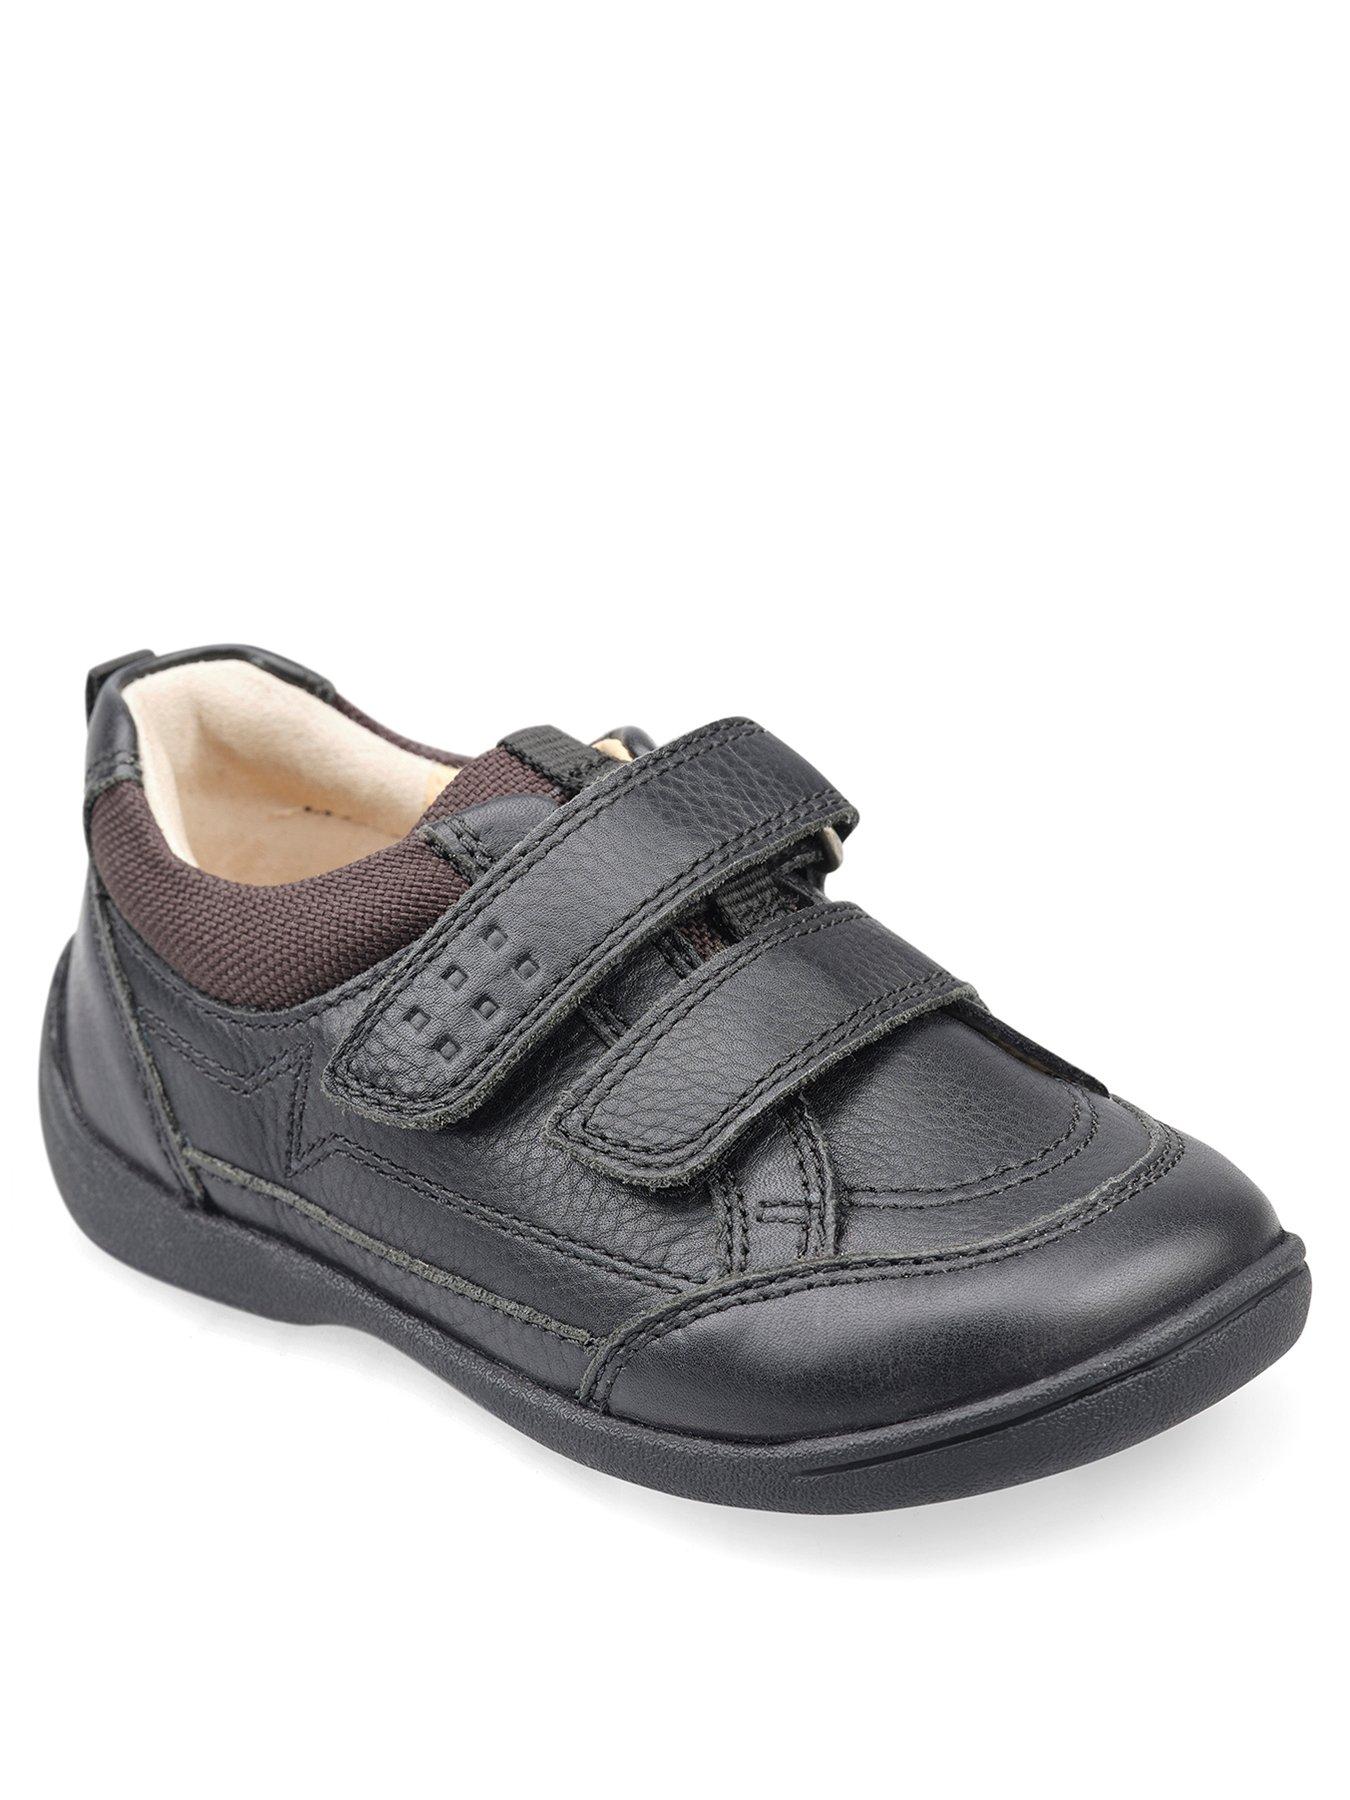 Kids Boys Zigzag Strap School Shoes - Black Leather